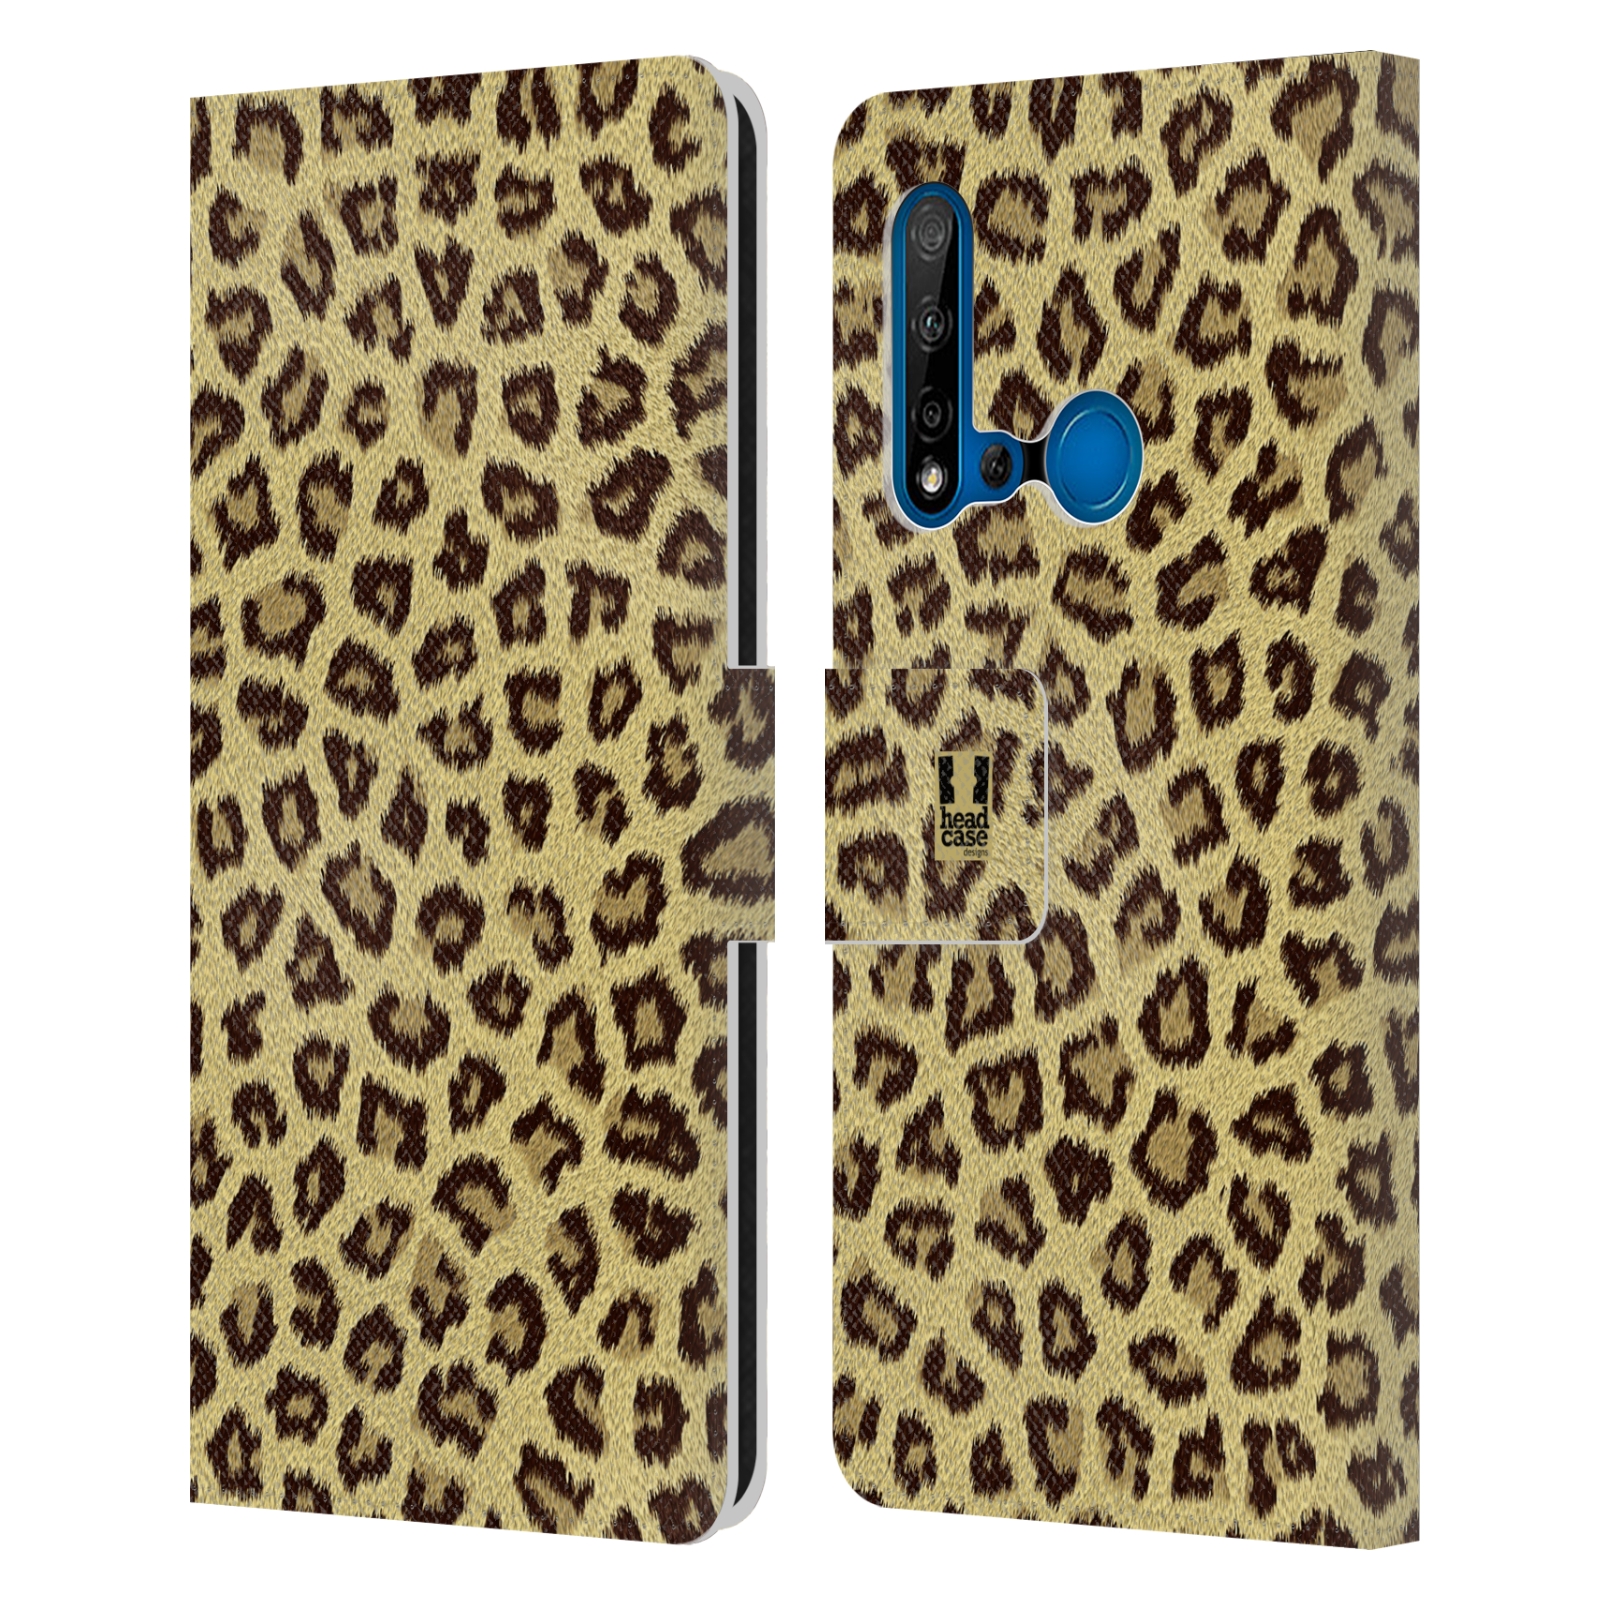 Pouzdro na mobil Huawei P20 LITE 2019 zvíře srst divoká kolekce jaguár, gepard